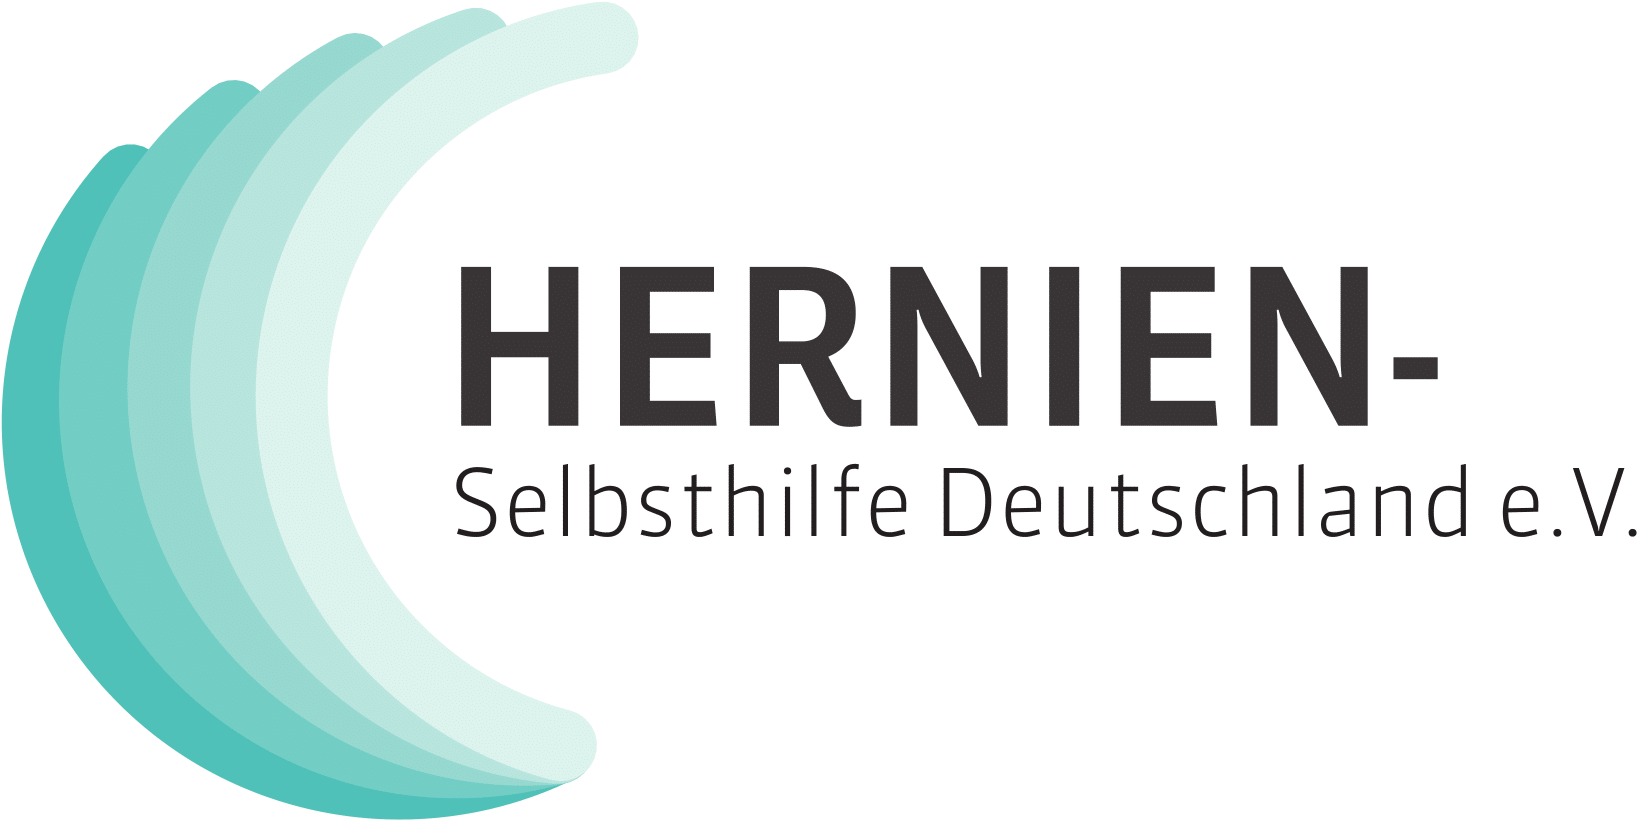 Hernien-Selbsthilfe Deutschland e. V.